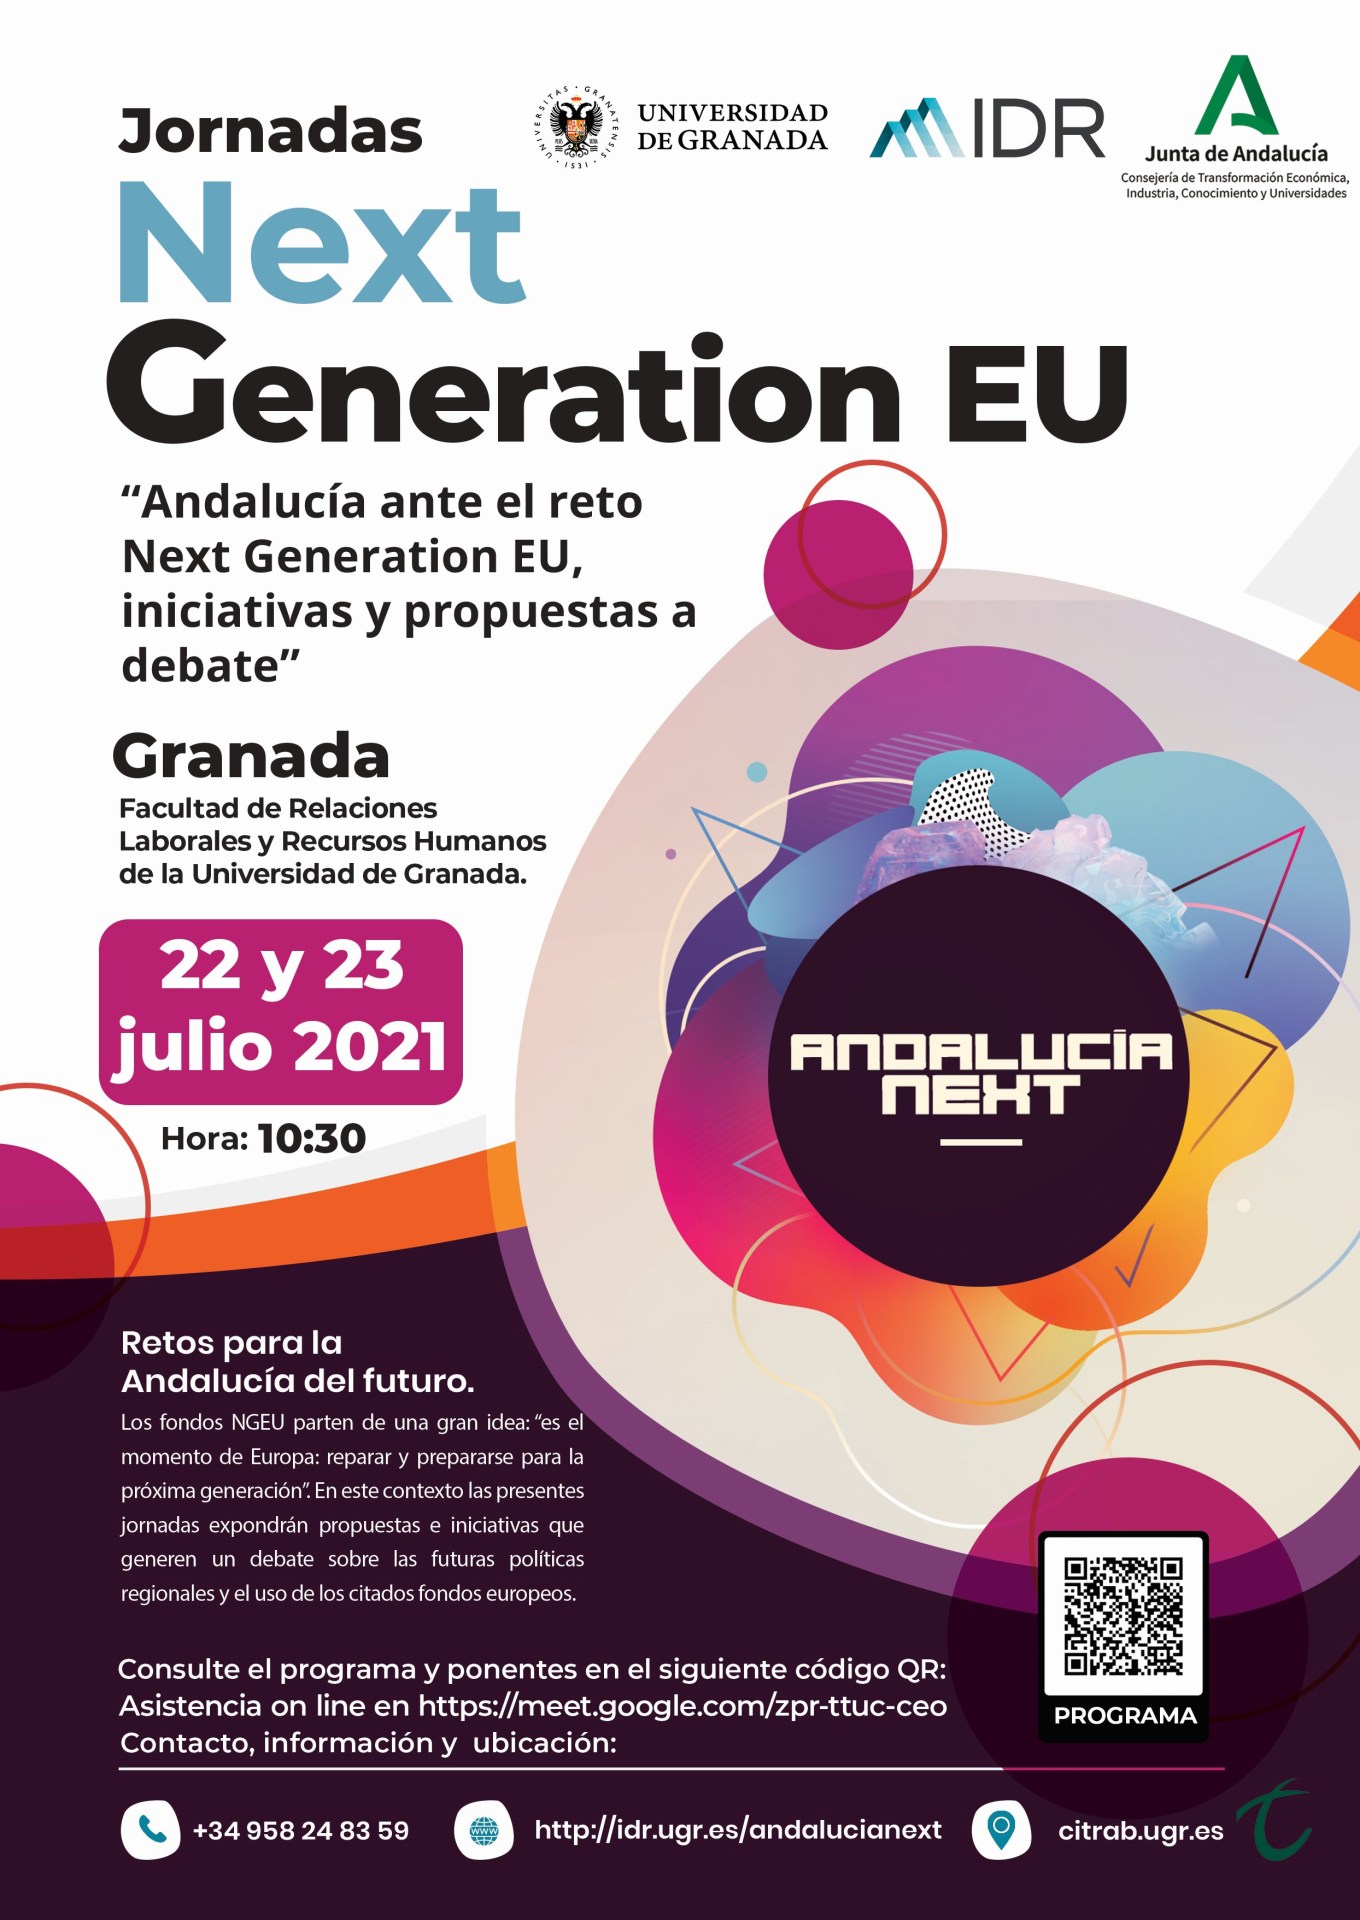 cartel de las Jornadas Next Generation EU, “Andalucía ante el reto NGEU"